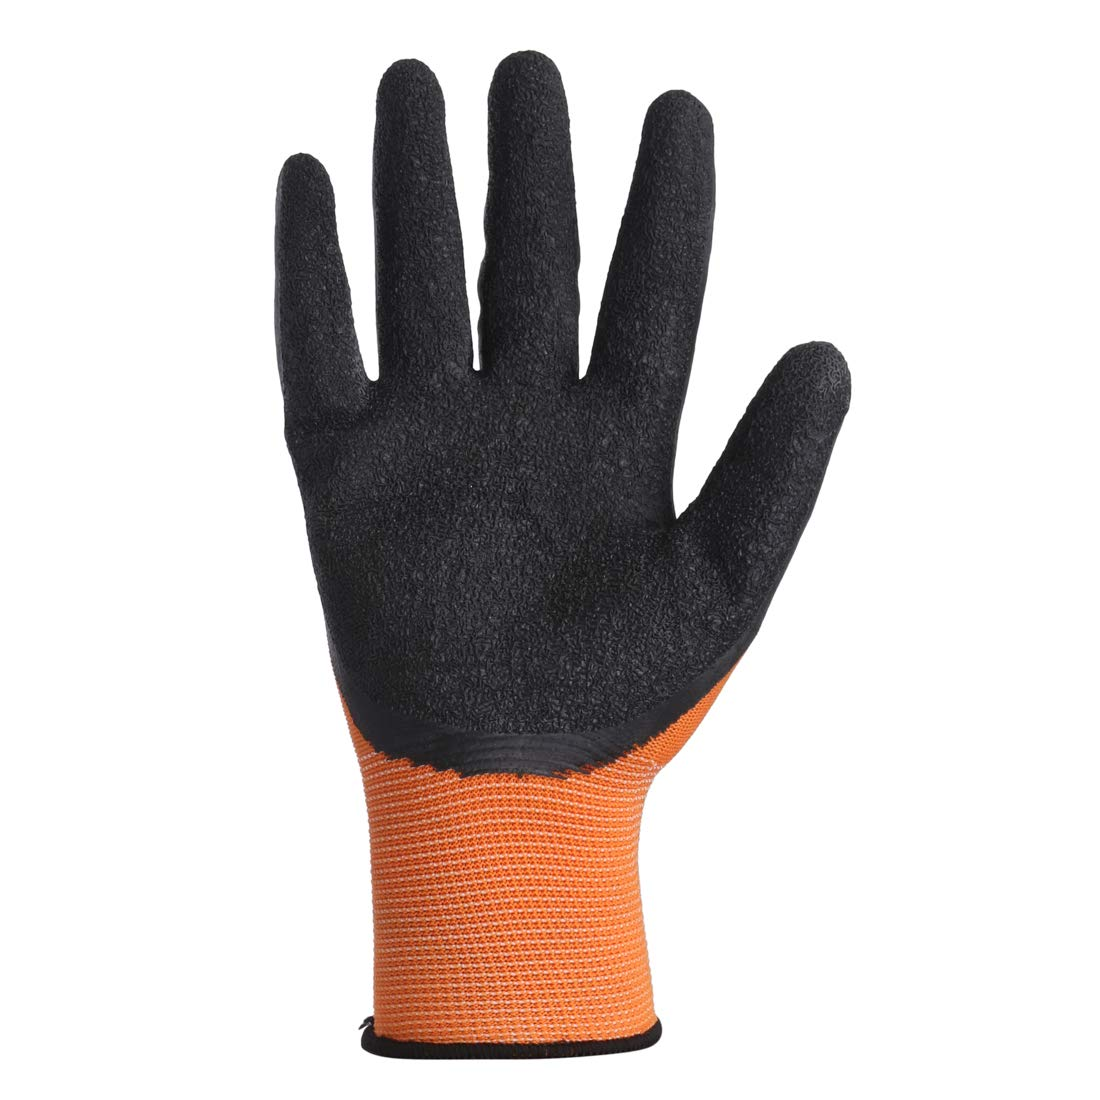 Karam Safety gloves hs 01 2